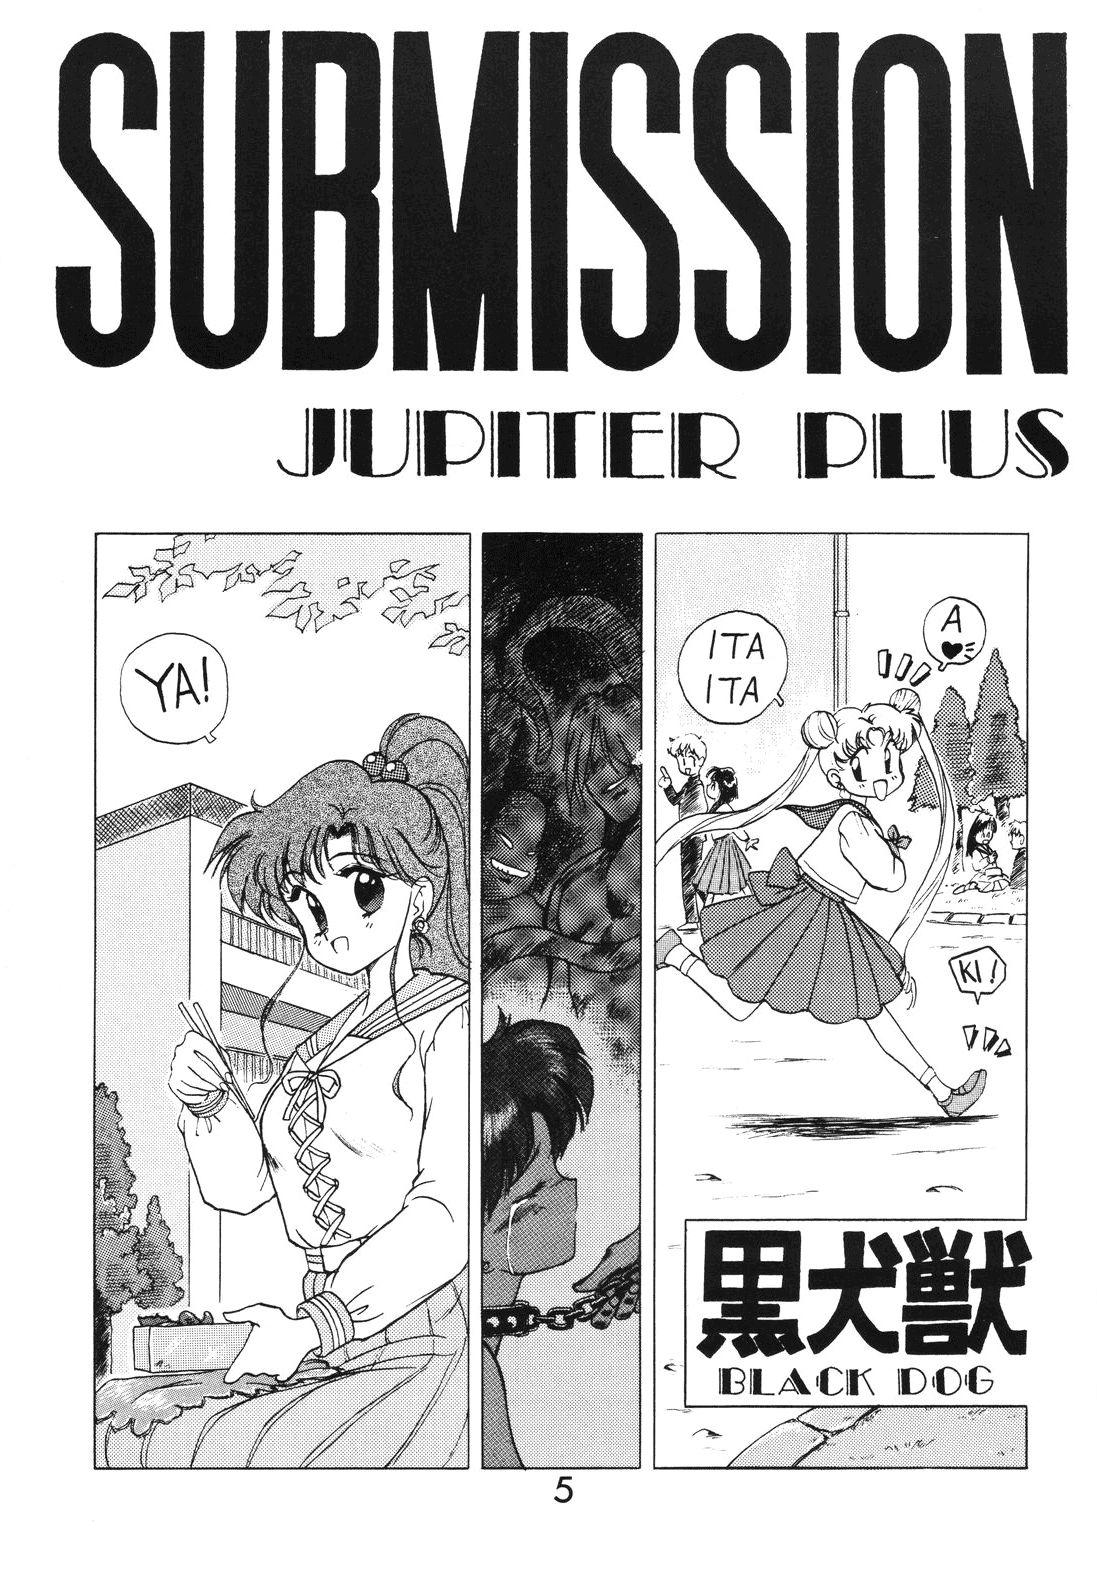 Realsex SUBMISSION JUPITER PLUS - Sailor moon Hardcore - Page 5